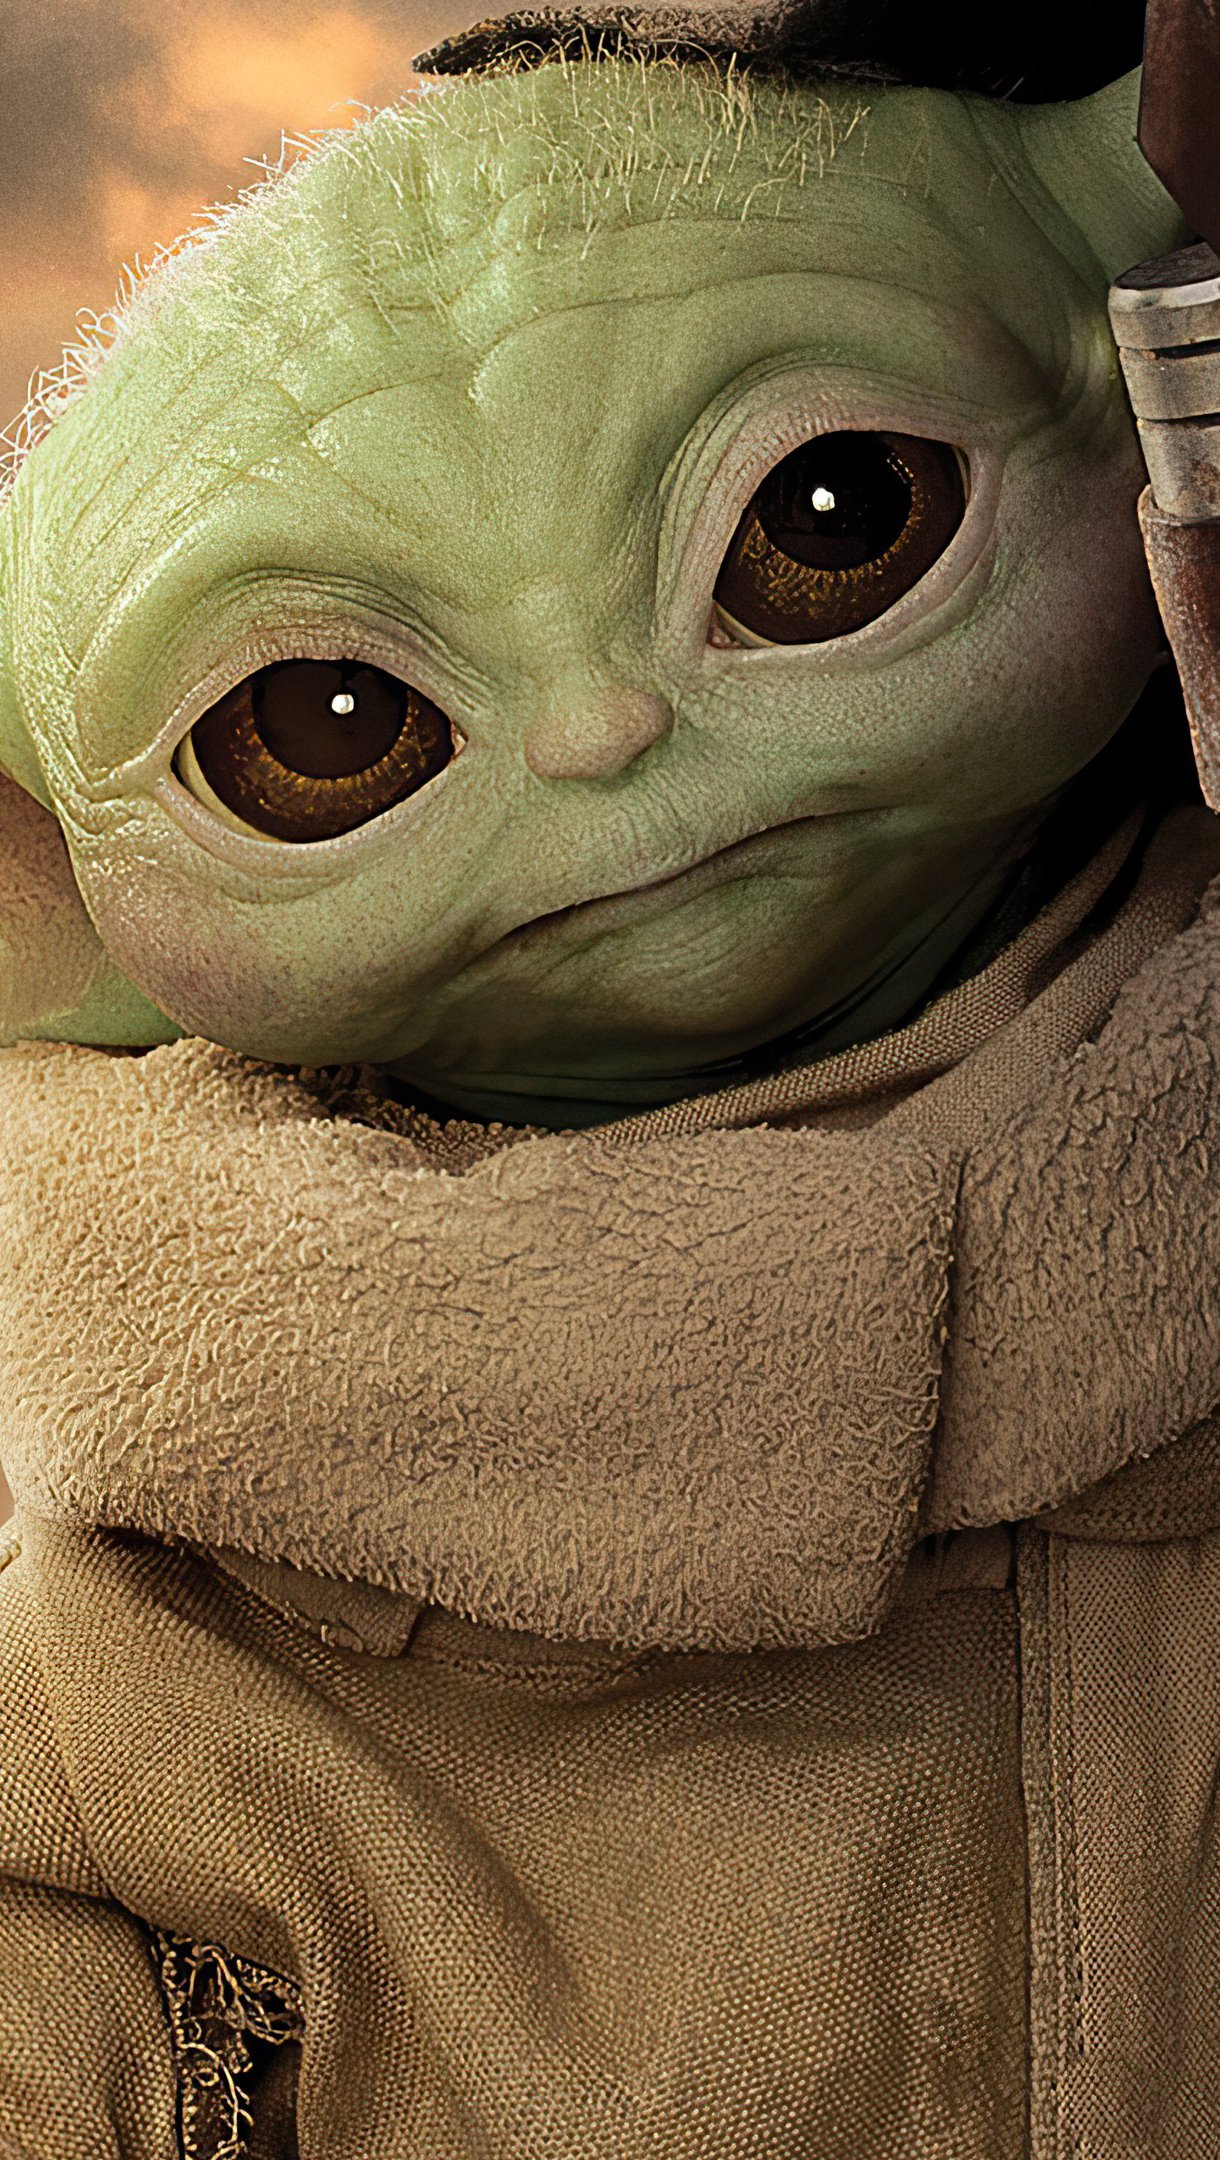 Baby Yoda The Mandalorian 4K Wallpapers